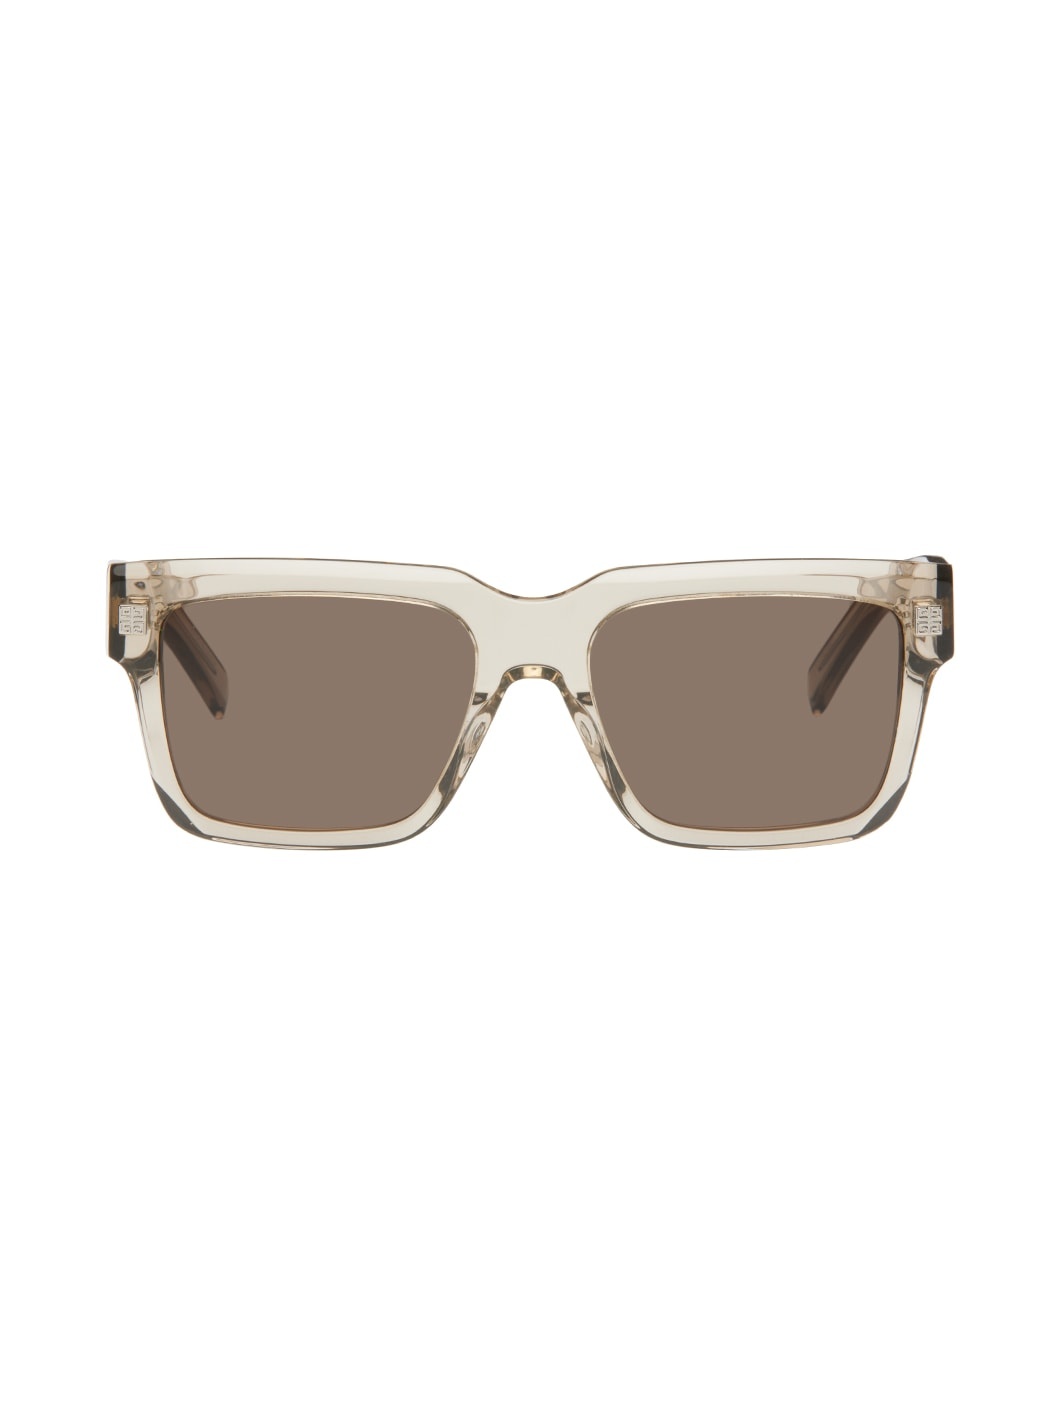 Gray GV Day Sunglasses - 1